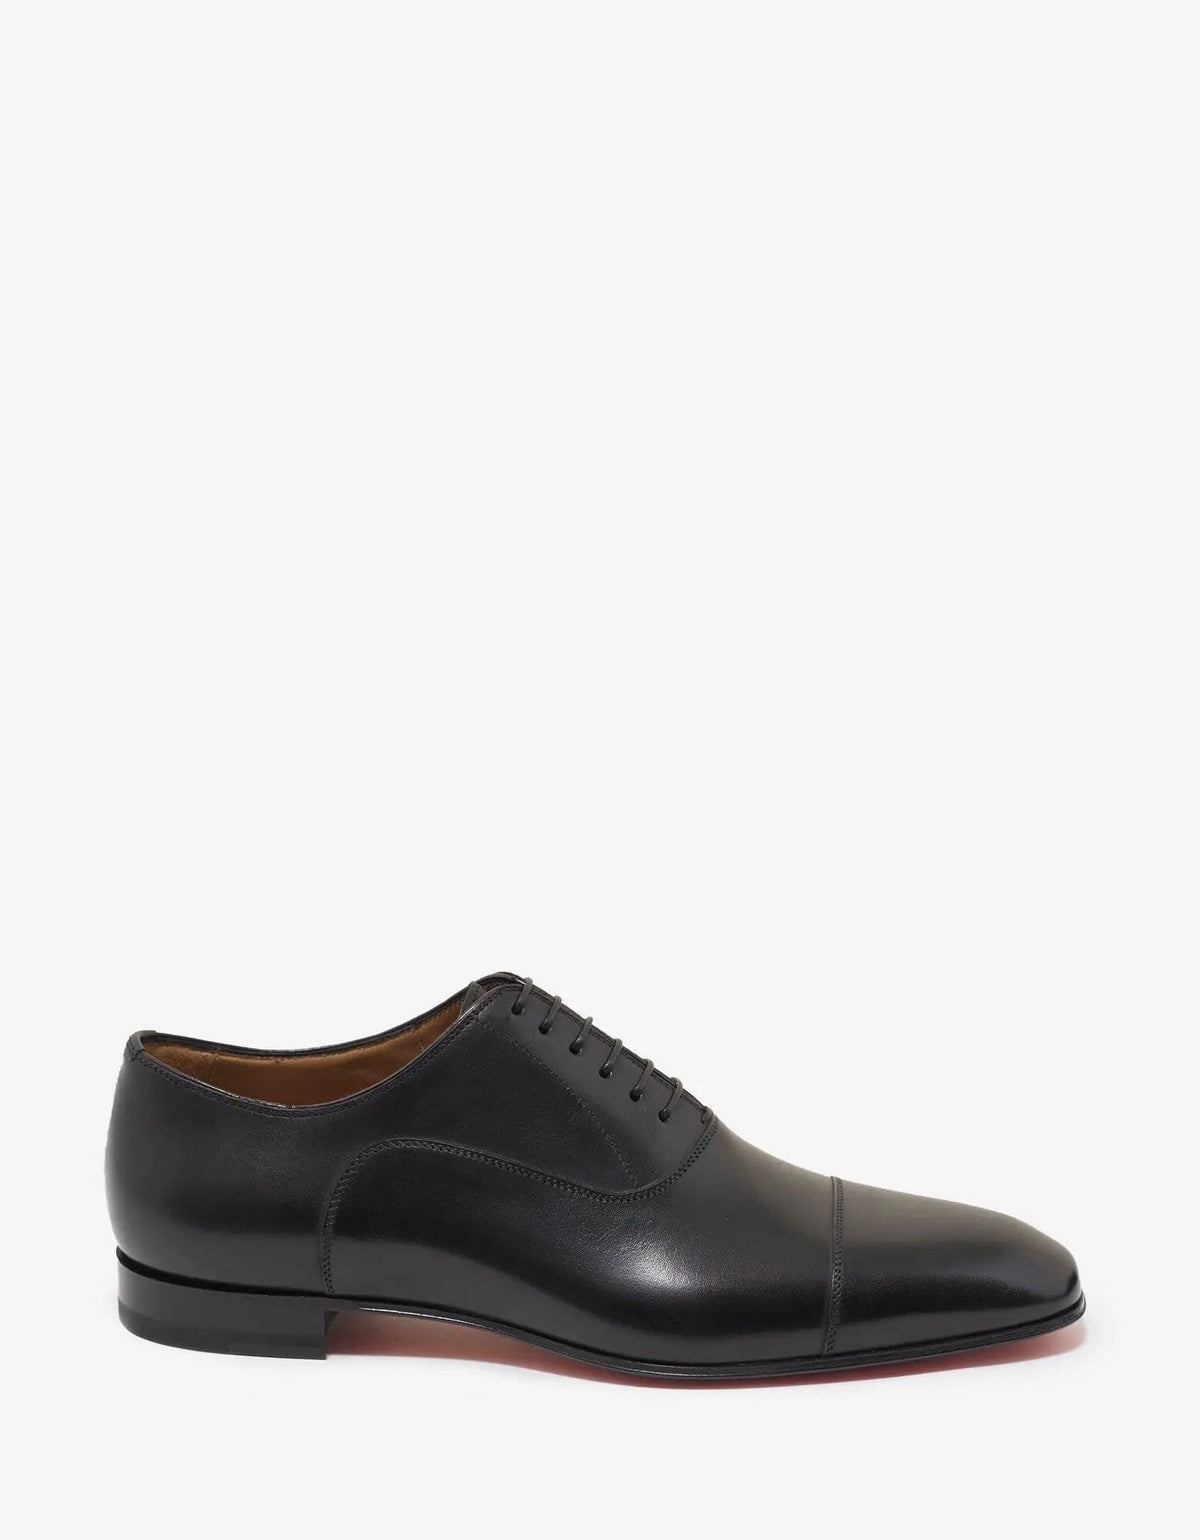 Christian Louboutin - Greggo Black Leather Oxford Shoes -